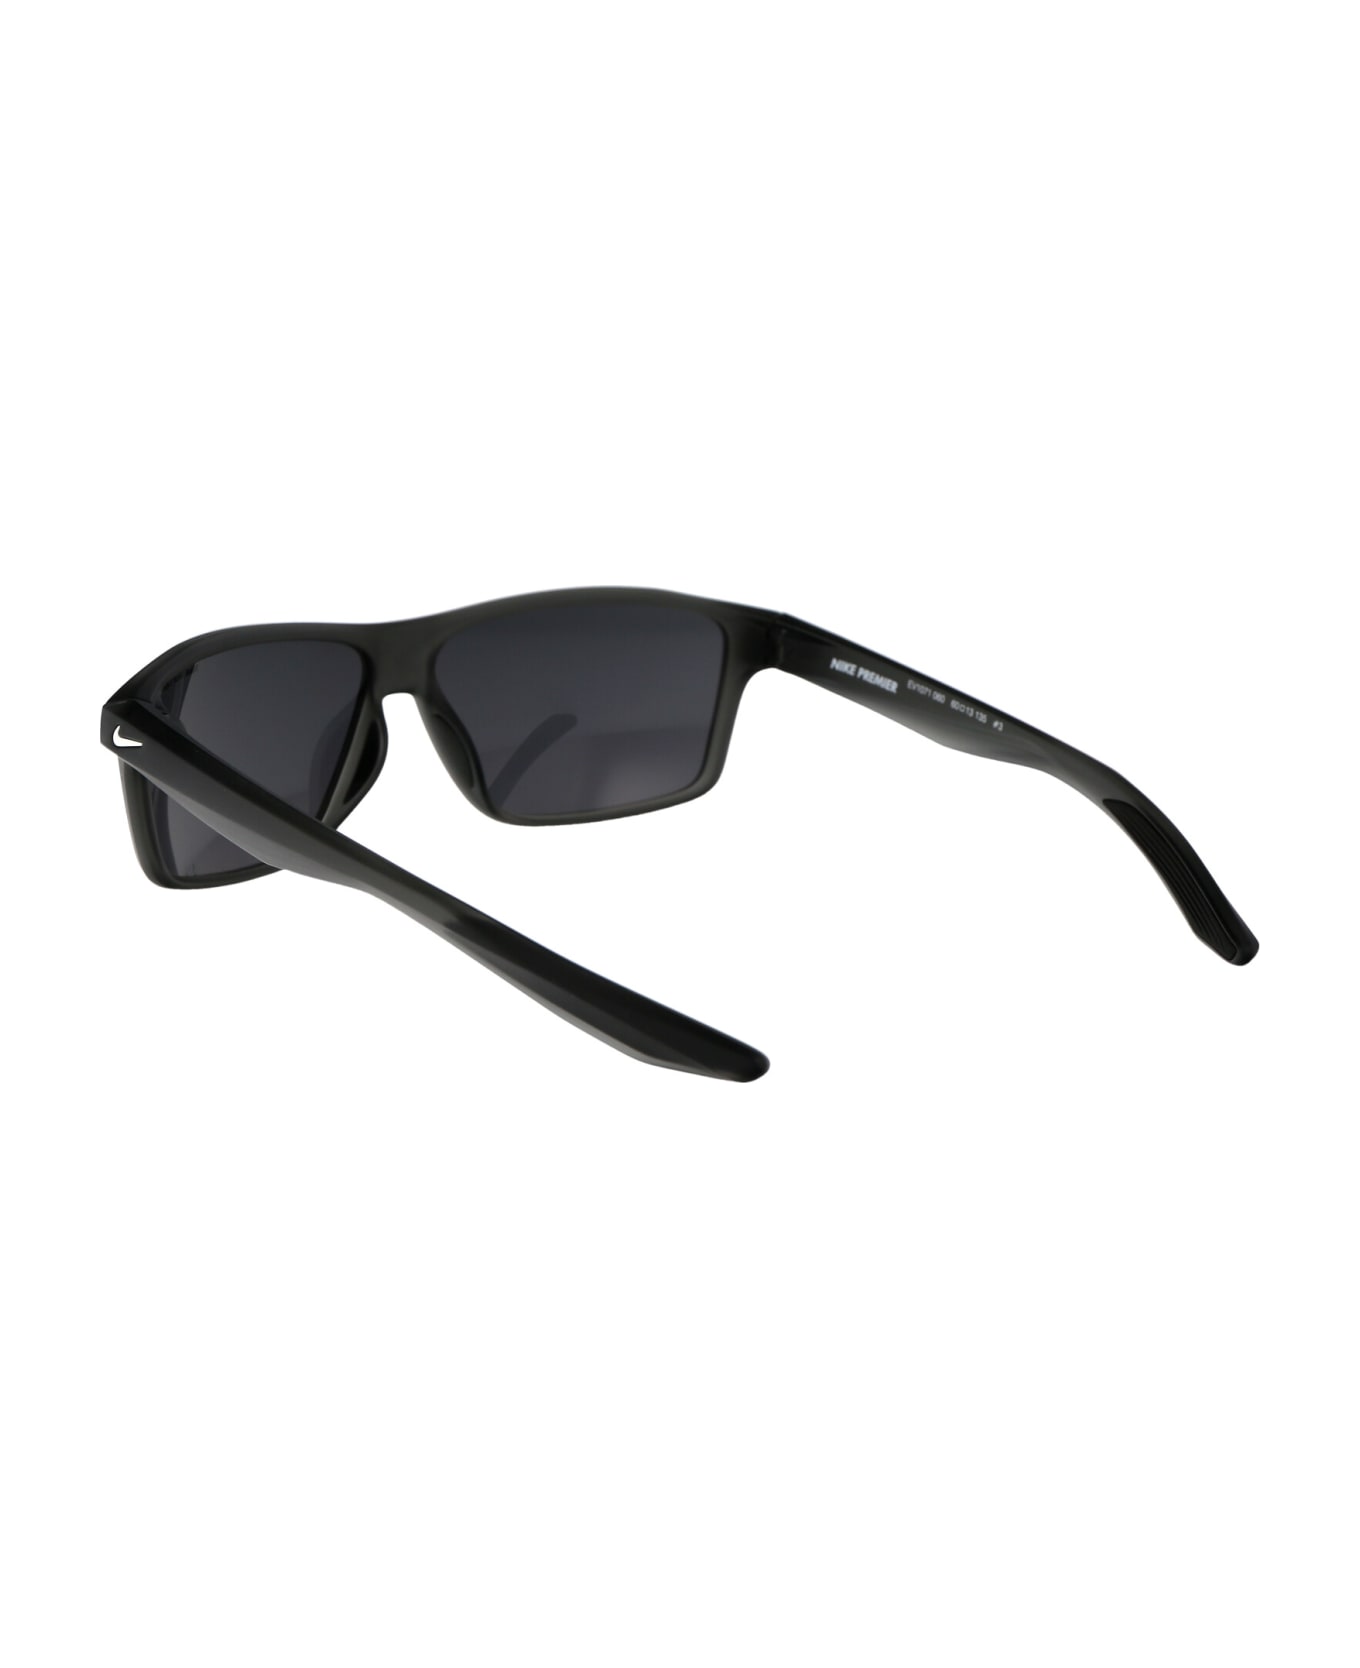 Nike Premier Sunglasses - 060 DARK GREY ANTHRACITE サングラス